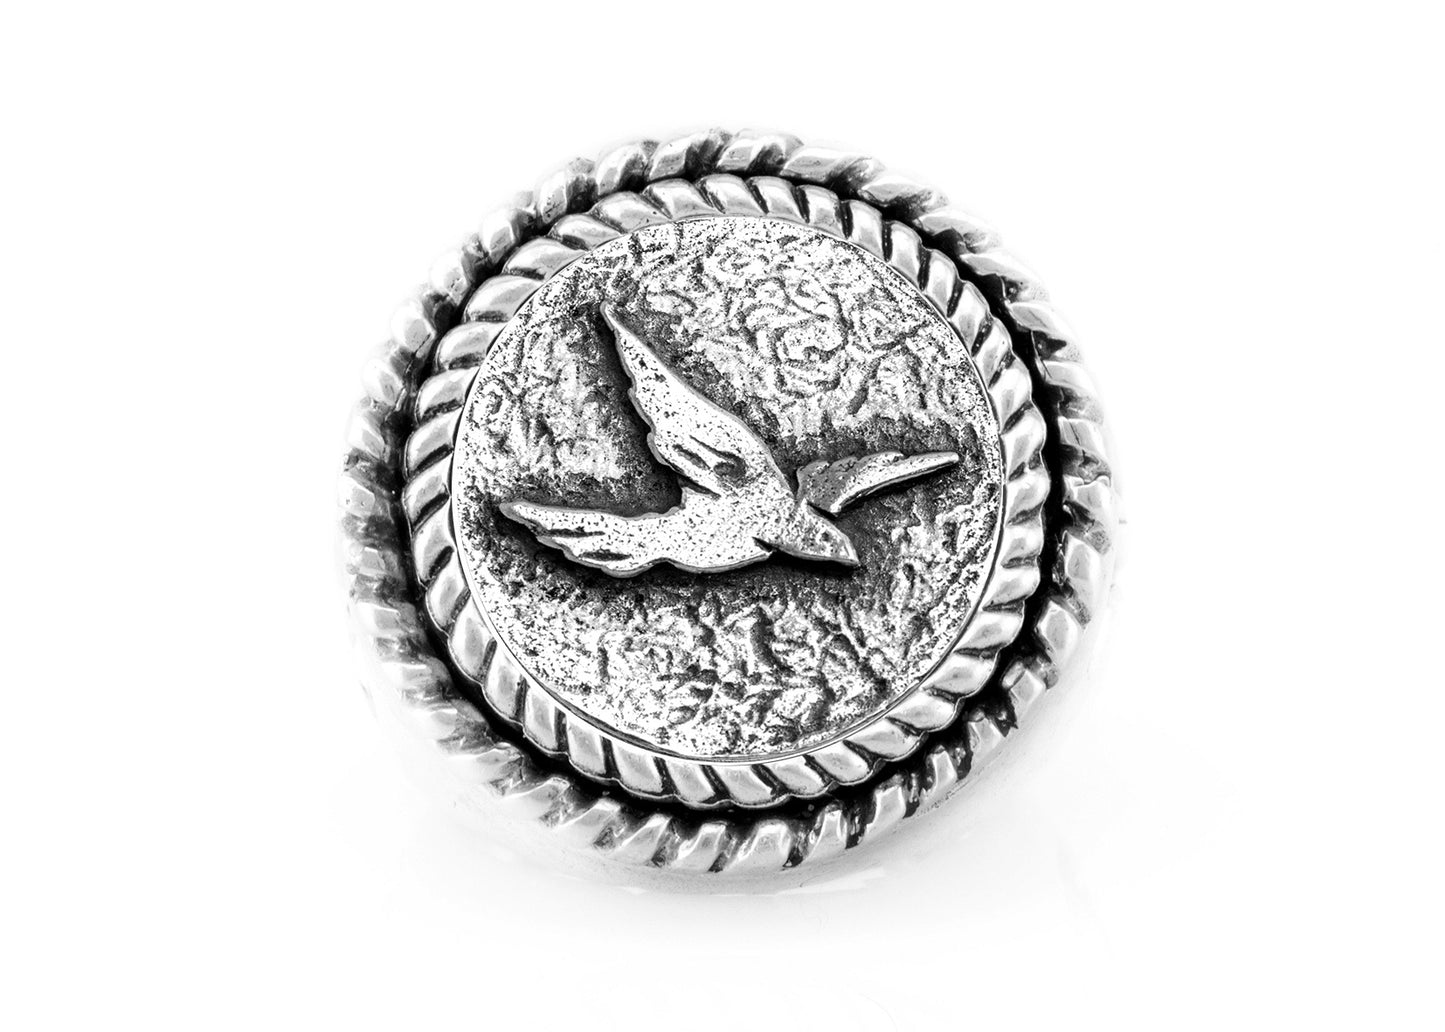 coin ring with the Flying bird medallion on fleur de lis ring  bird ring